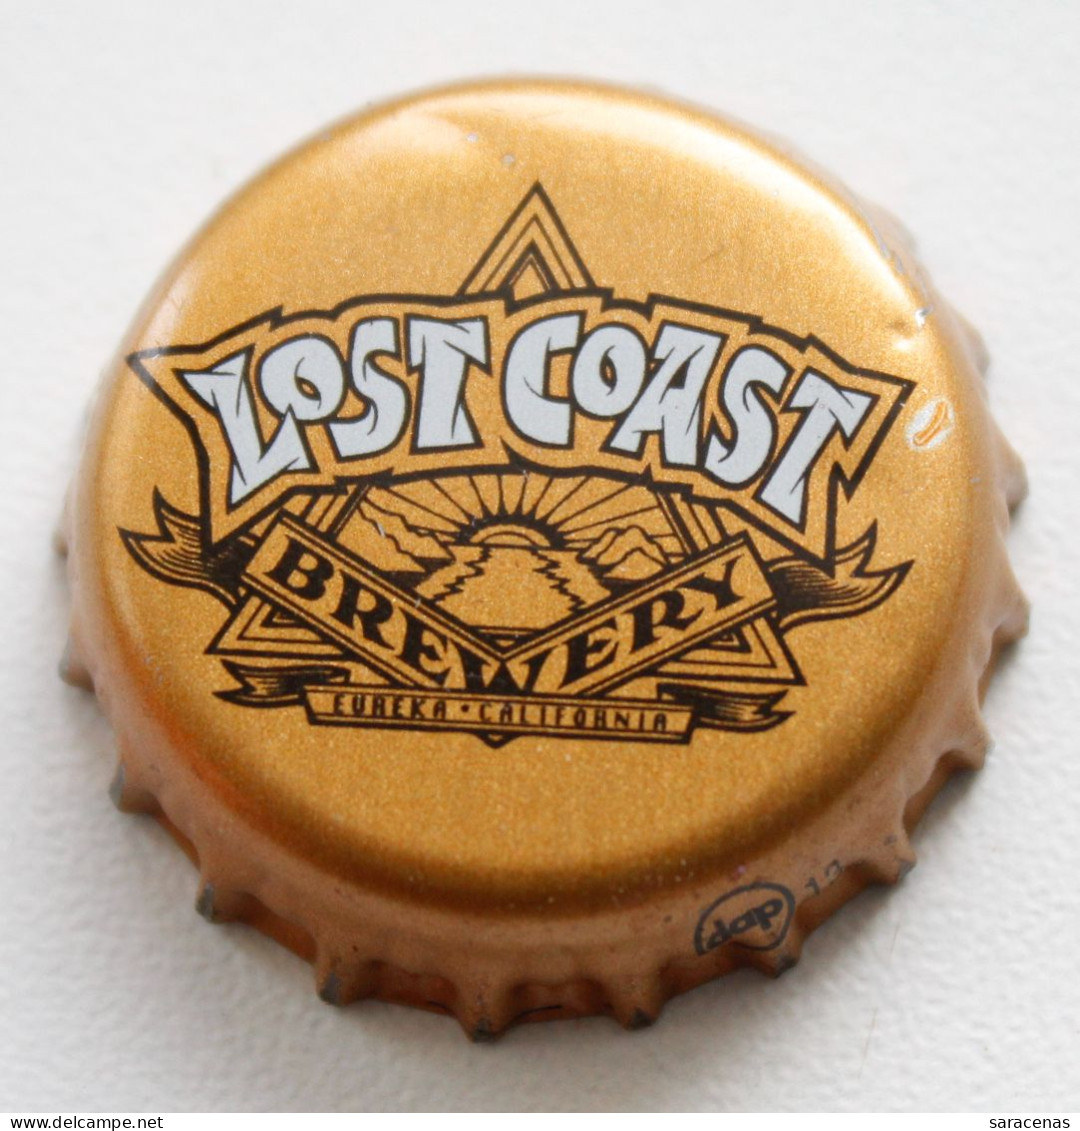 United States Lost Coast Beer Bottle Cap - Limonade